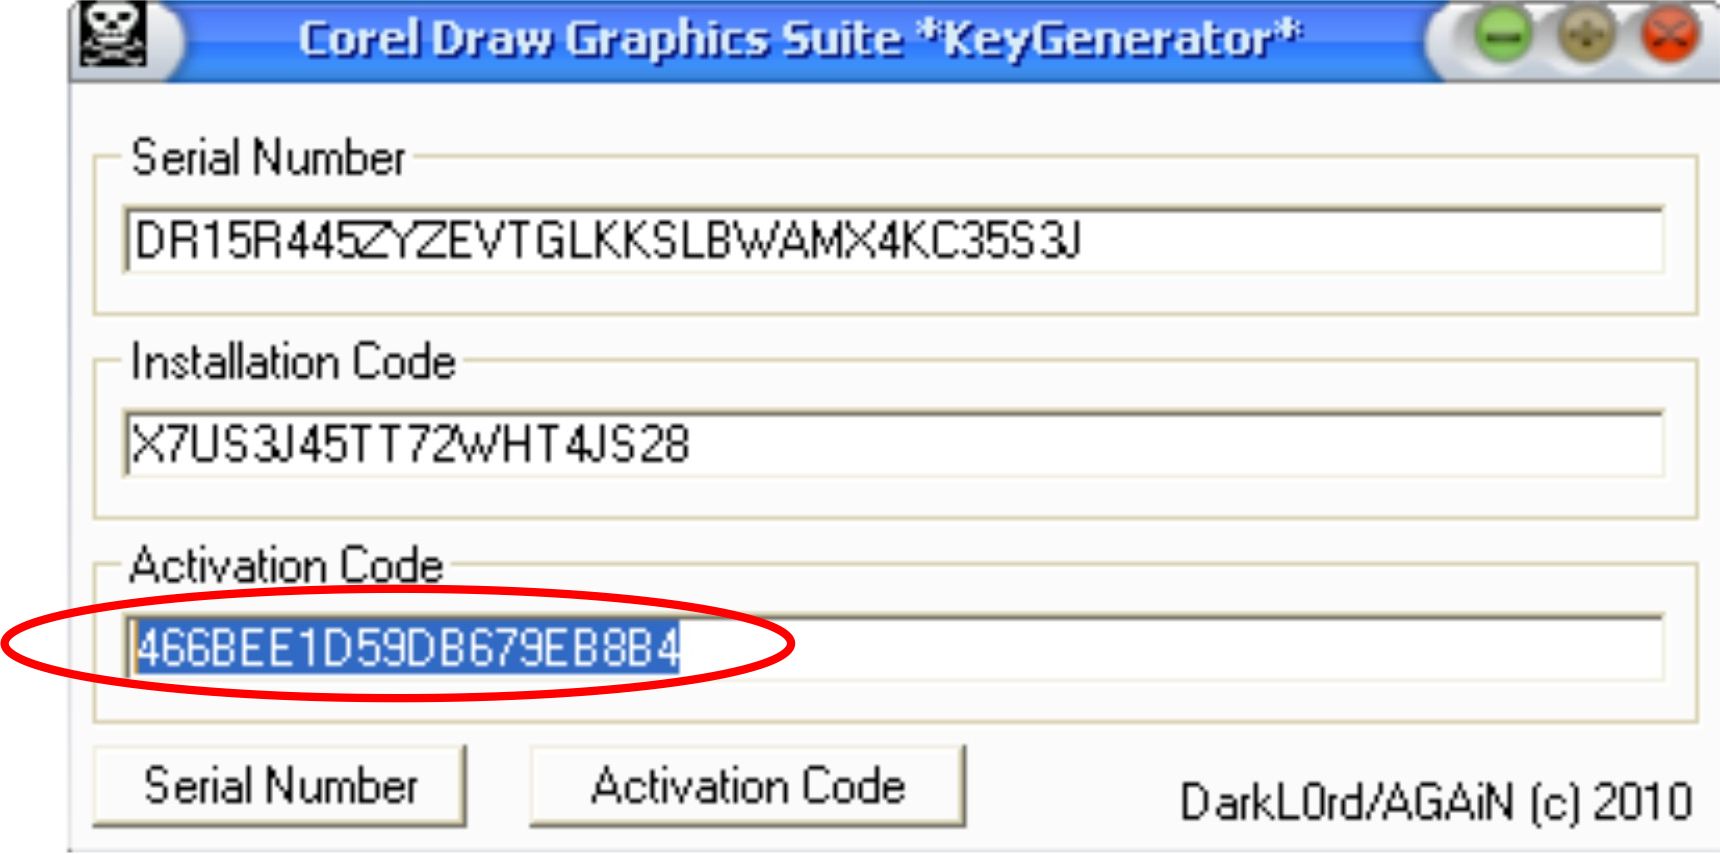 Coreldraw keygen serial key crack activator works